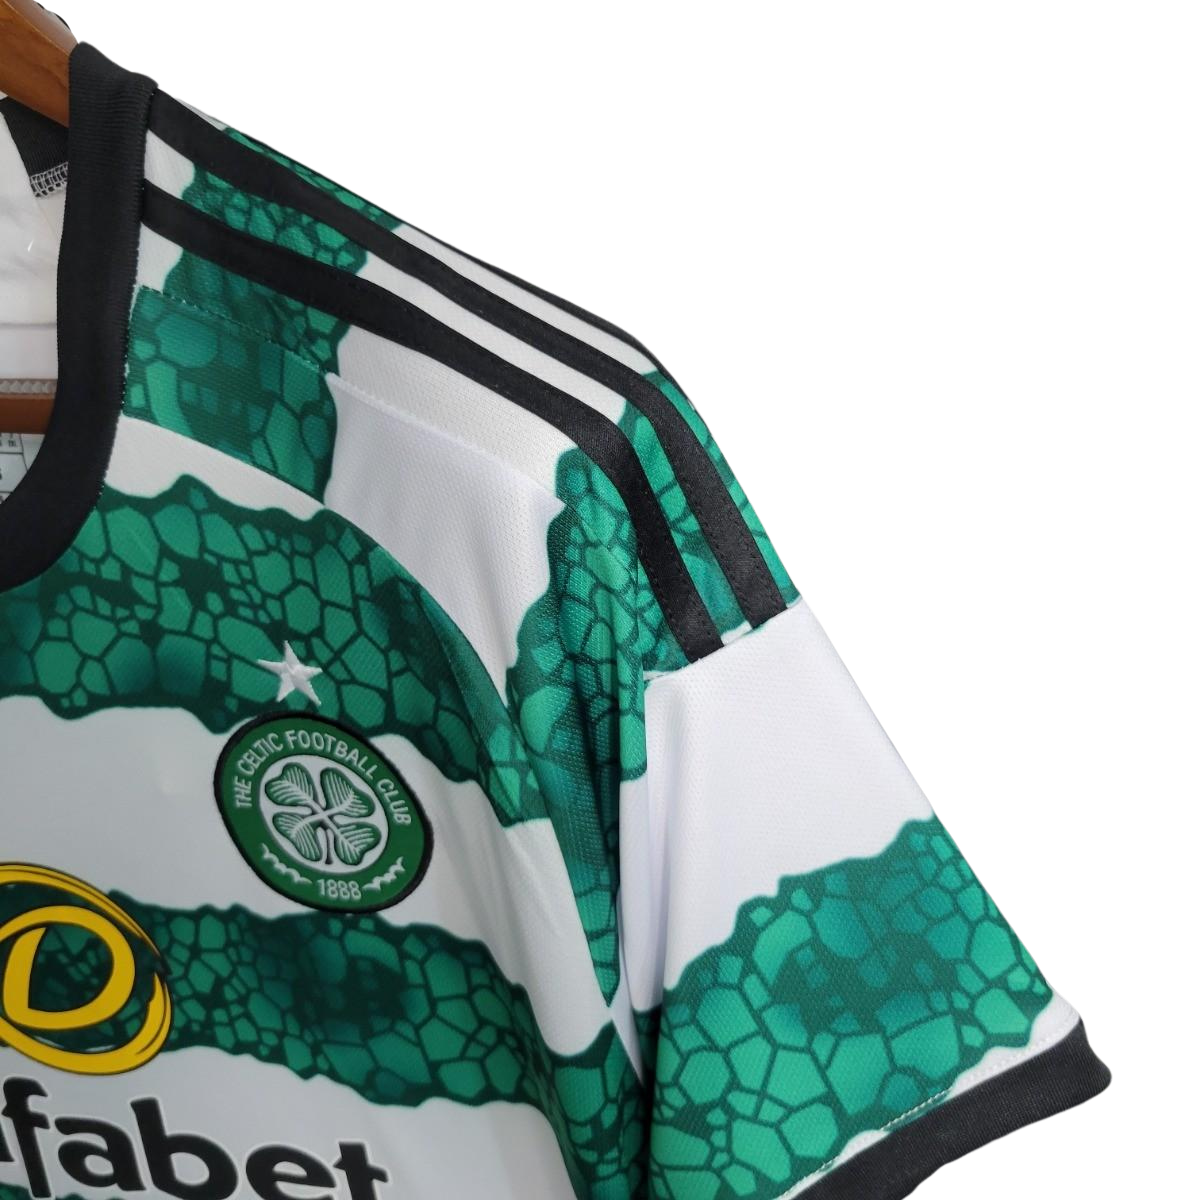 Celtic FC 23/24 Home Kit - Fan Version - Side